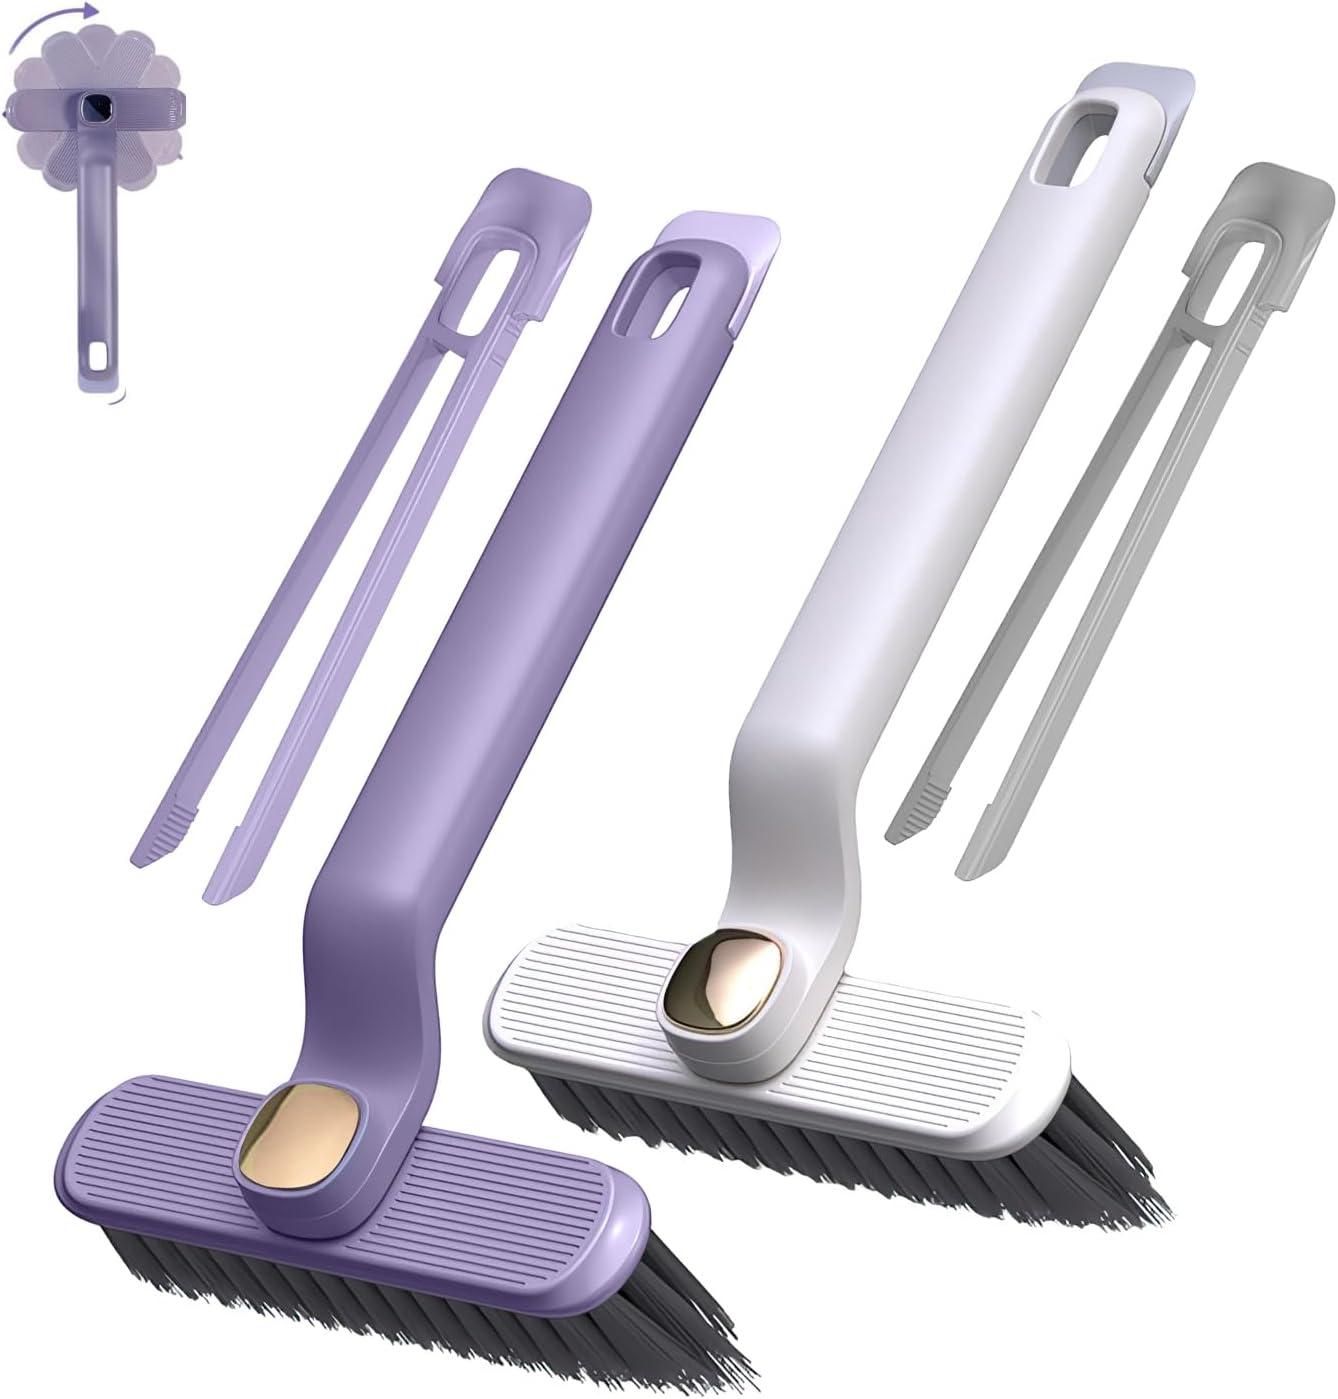 SpinScrub™ Cleaning Brush